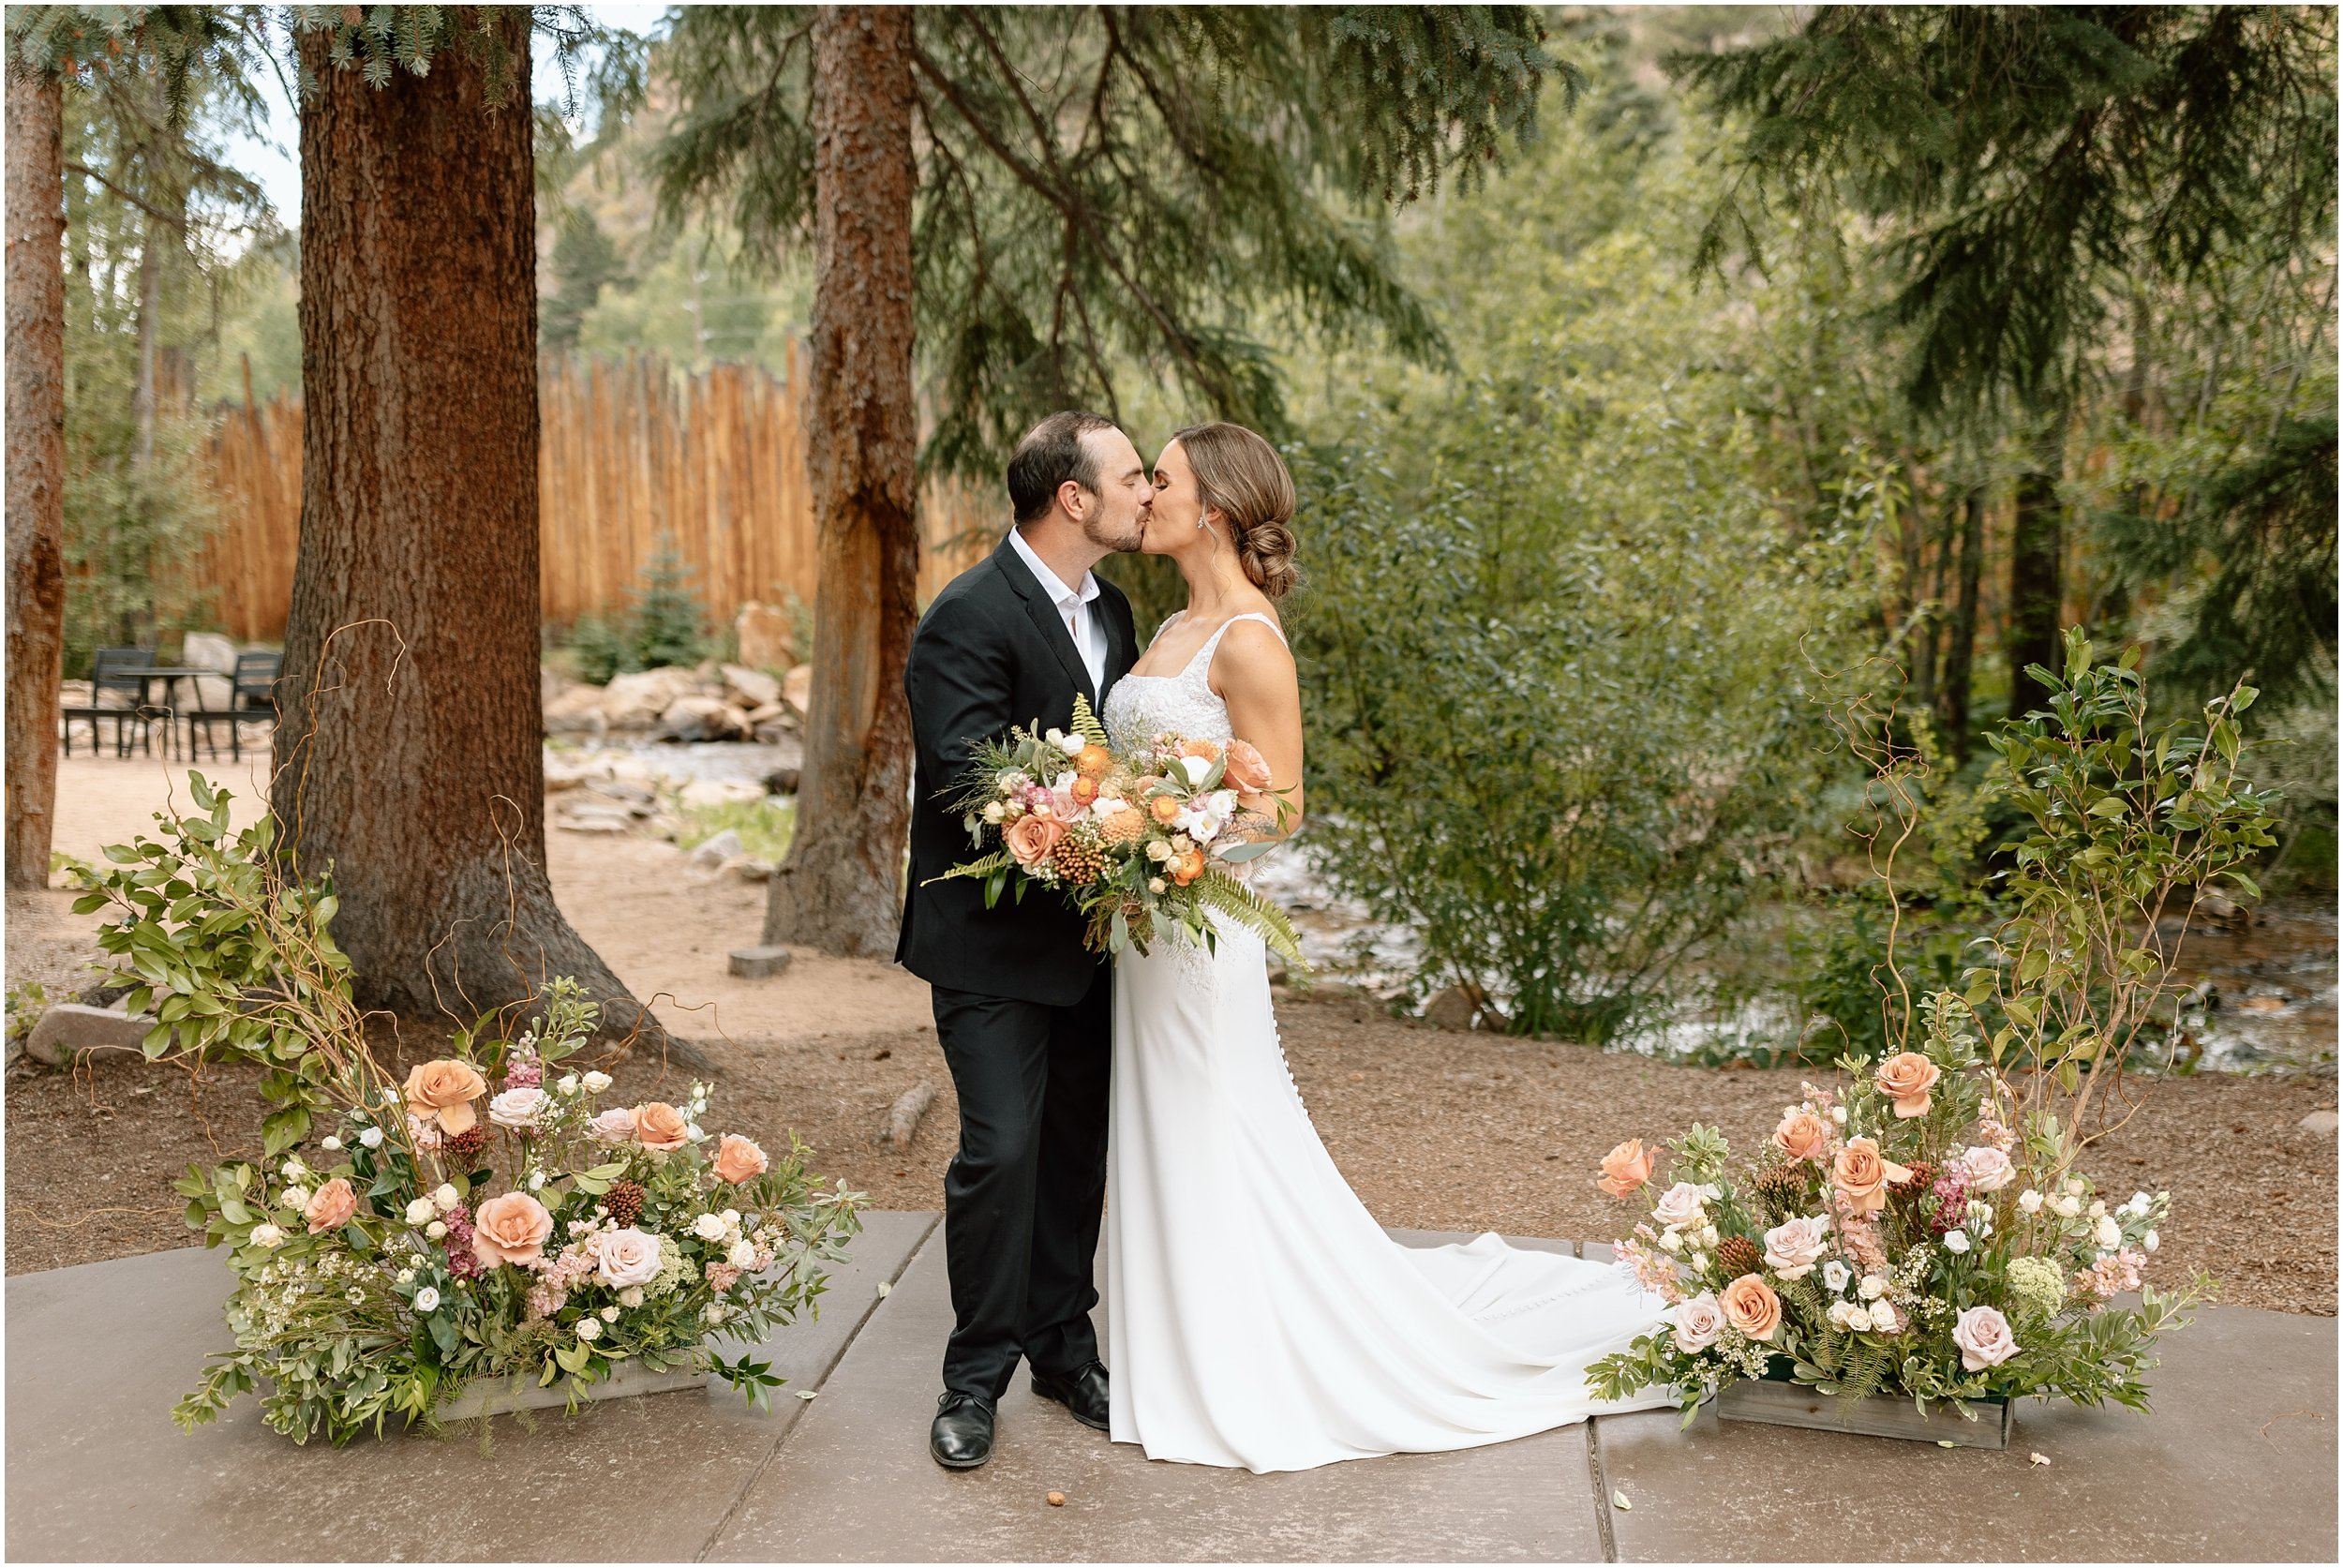 Mado Photo - Blacktone Rivers Ranch Idaho Springs Colorado Wedding Photography_0024.jpg